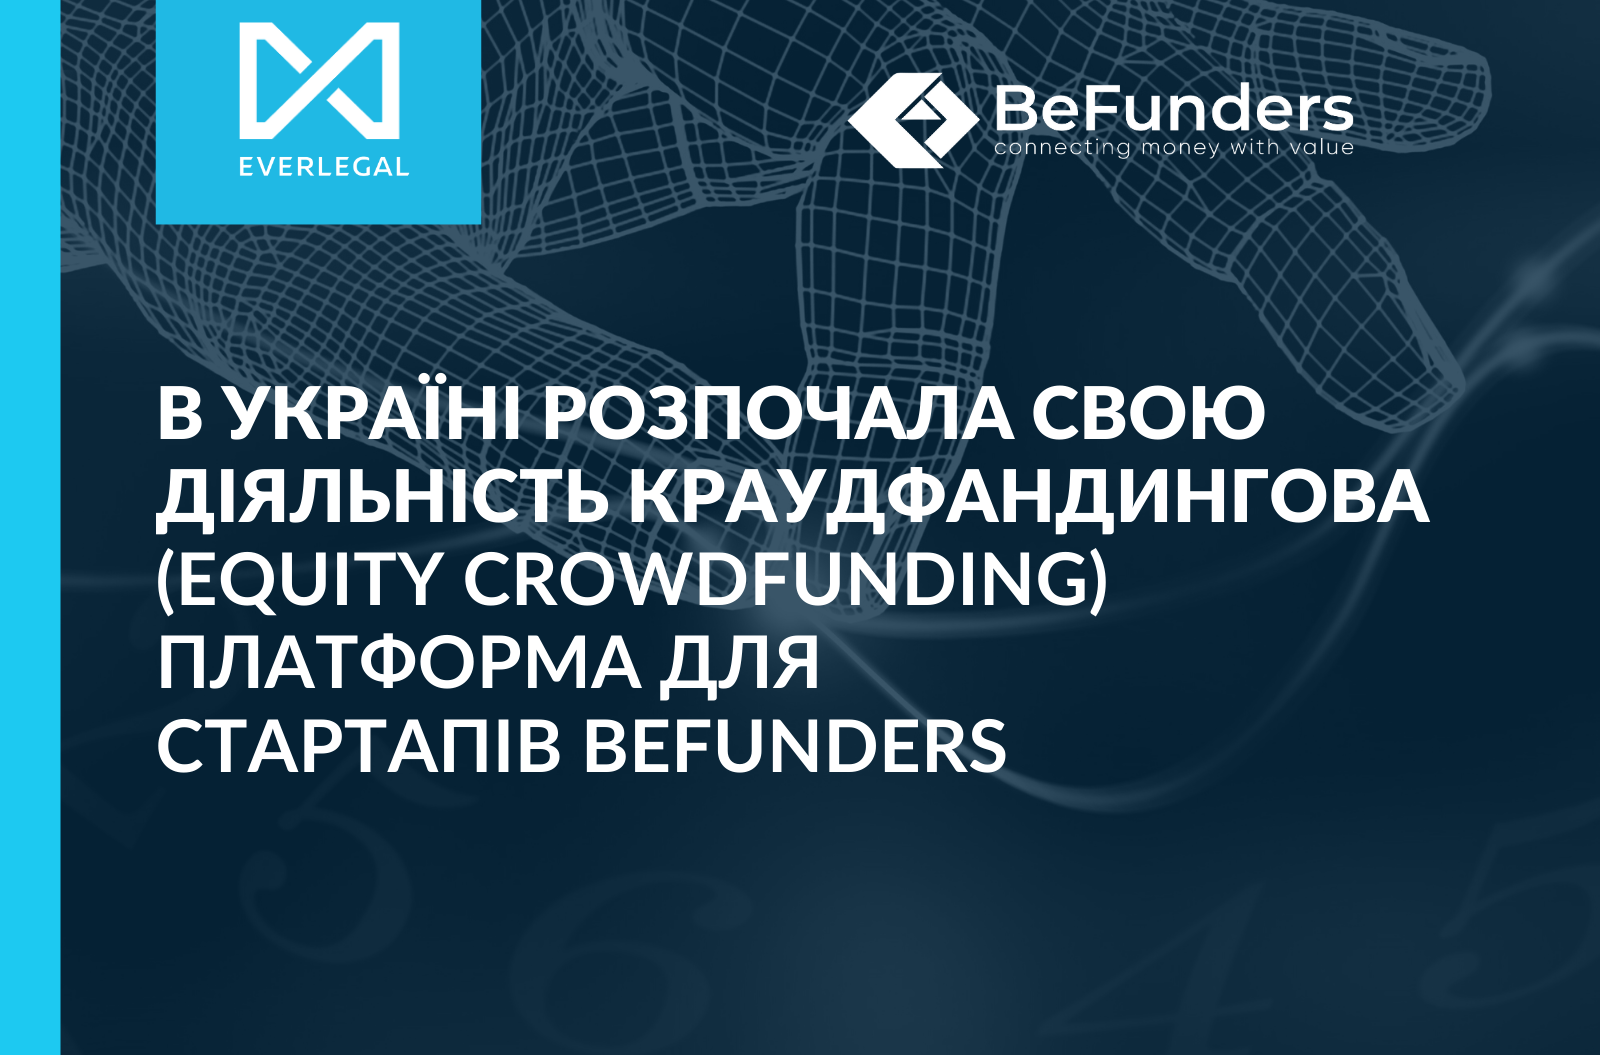 EVERLEGAL became a legal partner of the crowdfunding platform for startups BeFunders